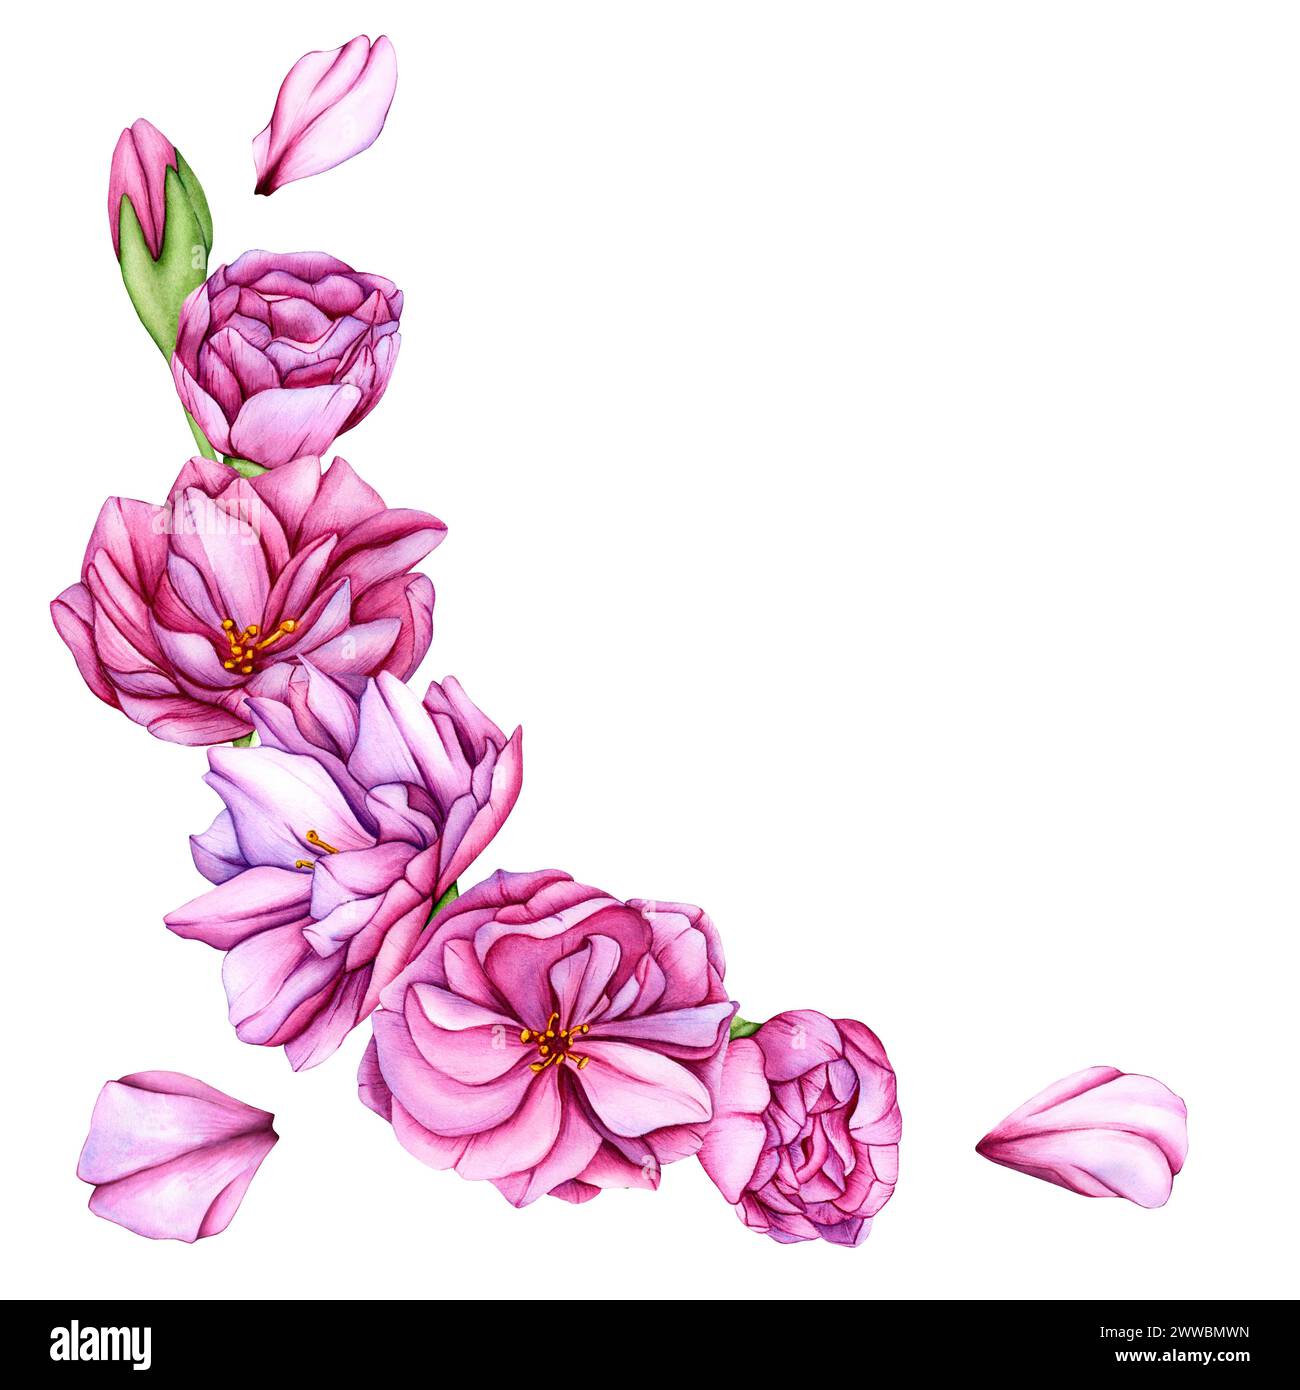 Rosafarbene Kirschblüten. Aquarellillustration Sakura Blütenblätter. Japanische Sakura Blumen botanische Illustration. Handgezeichnete Blütenknospen und Stockfoto